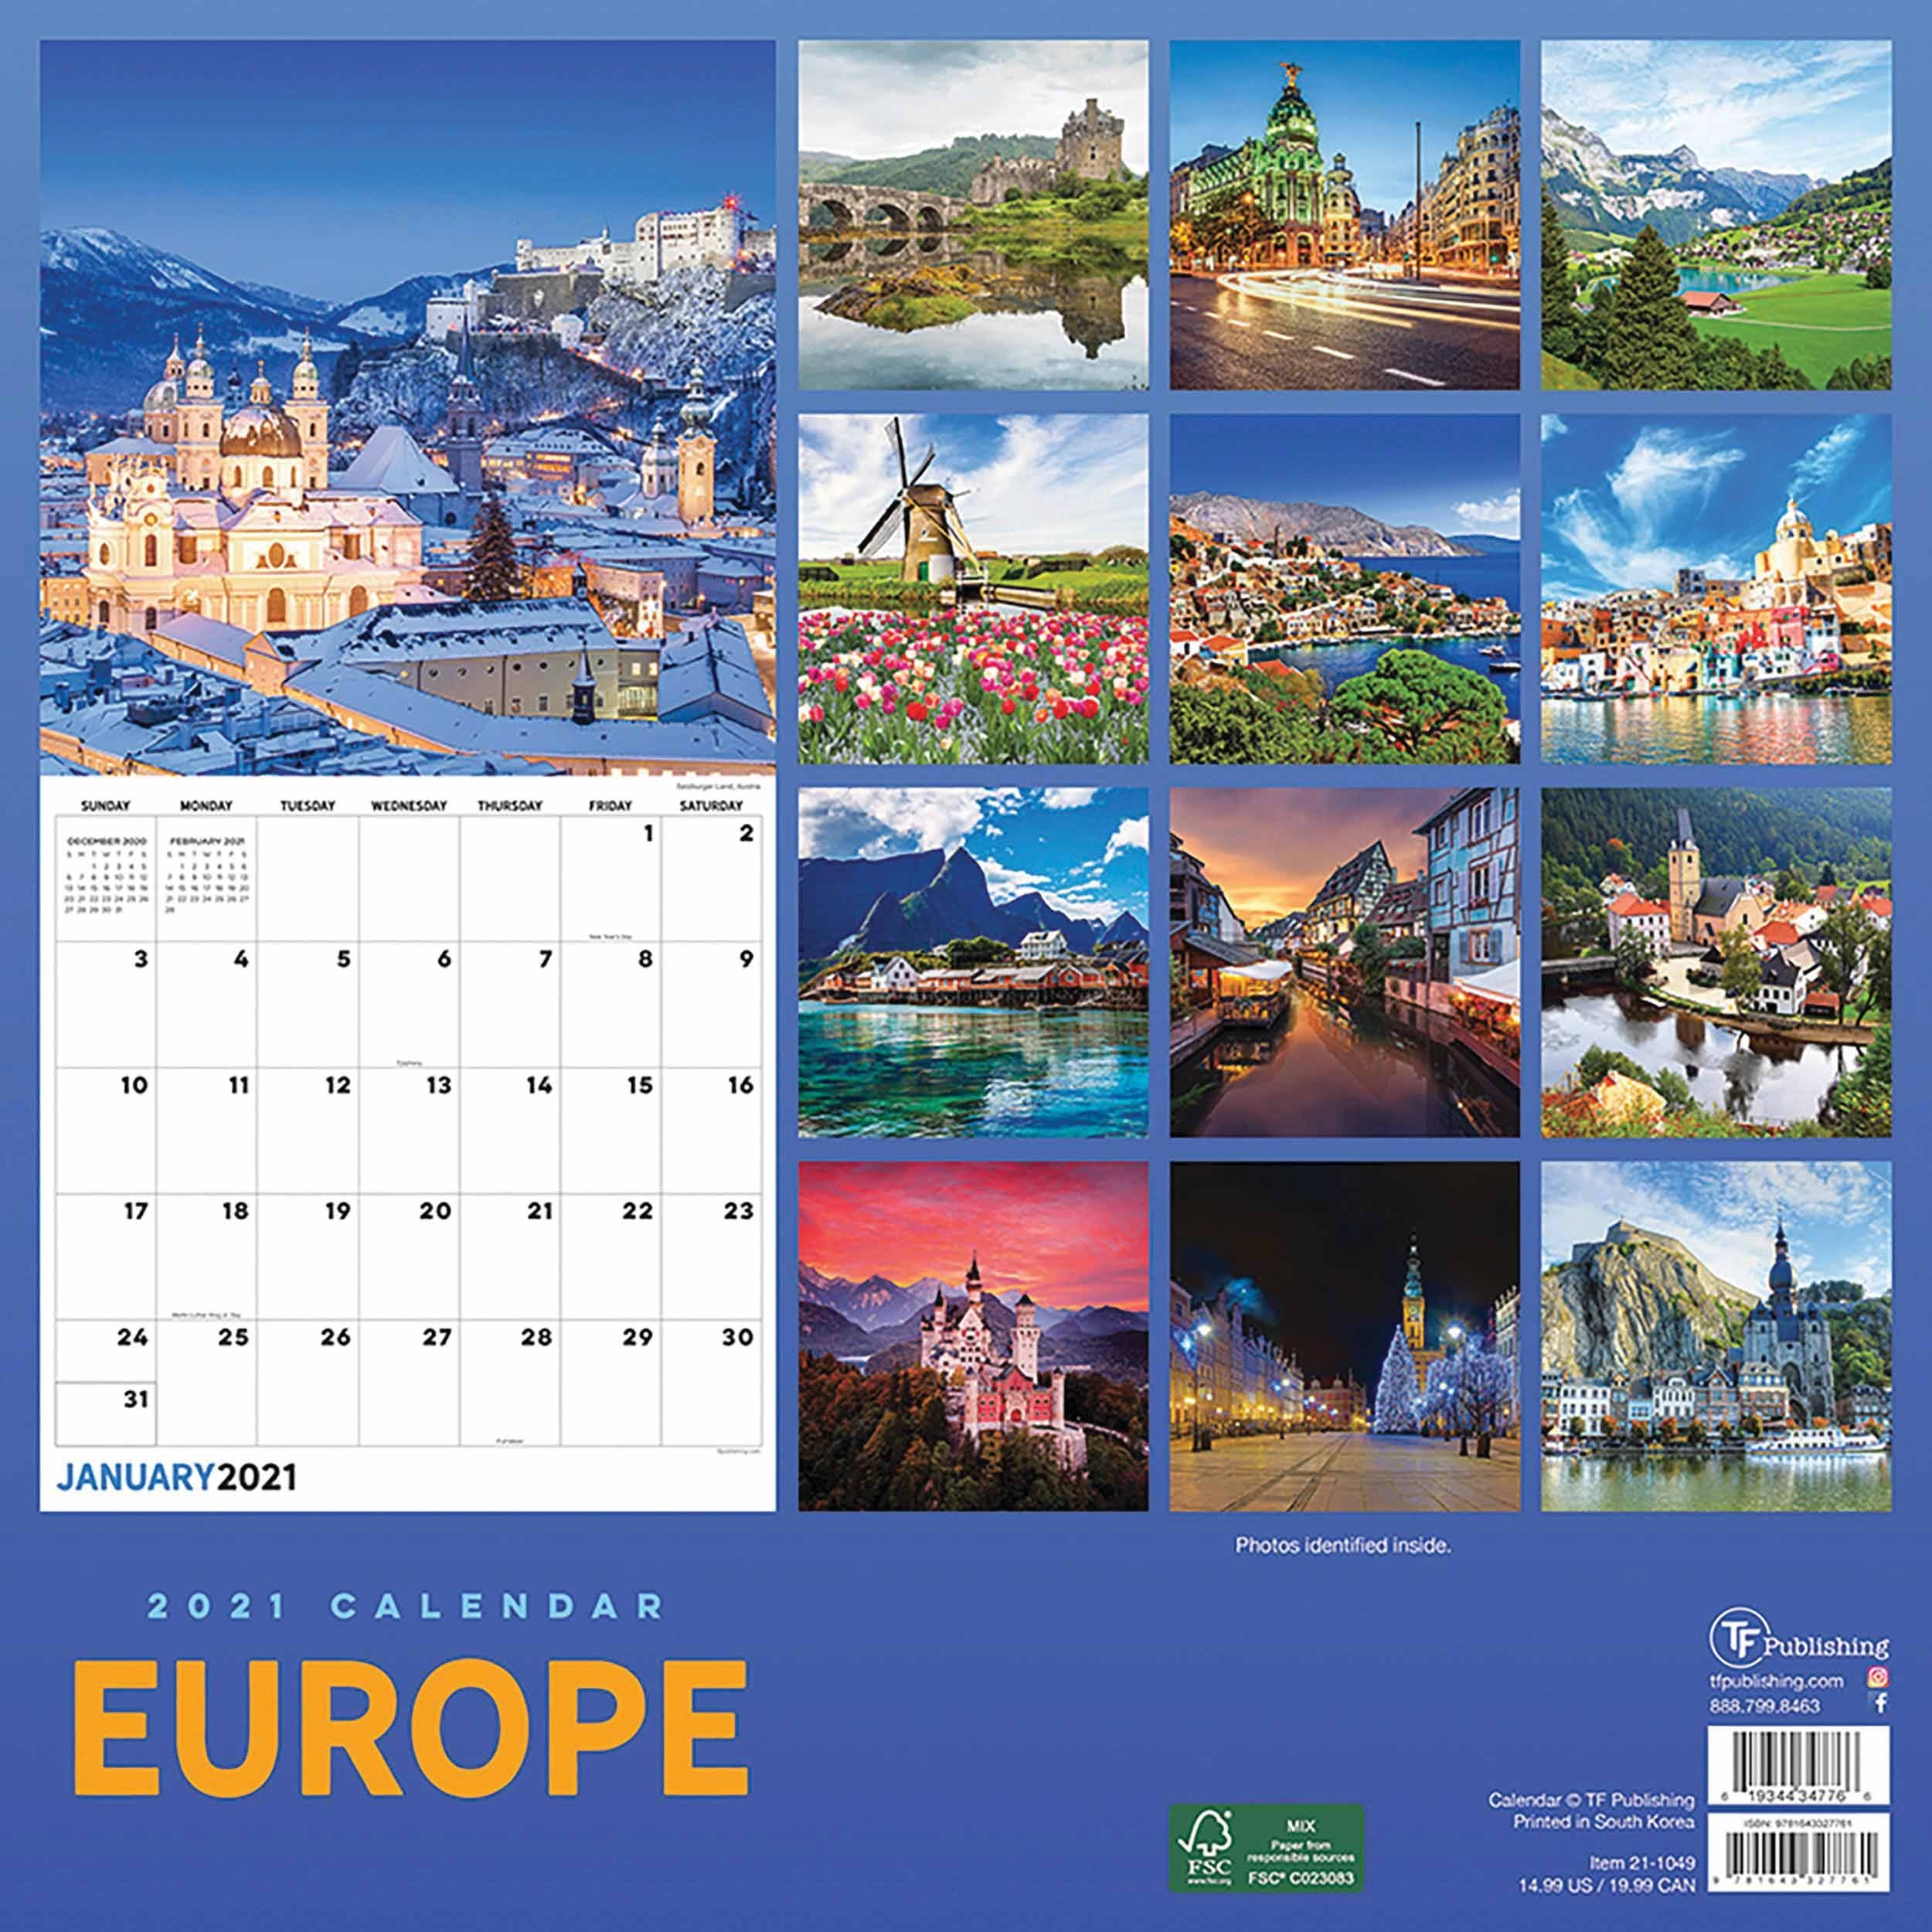 Europe Calendar 2021 At Calendar Club-European Calendar 2021